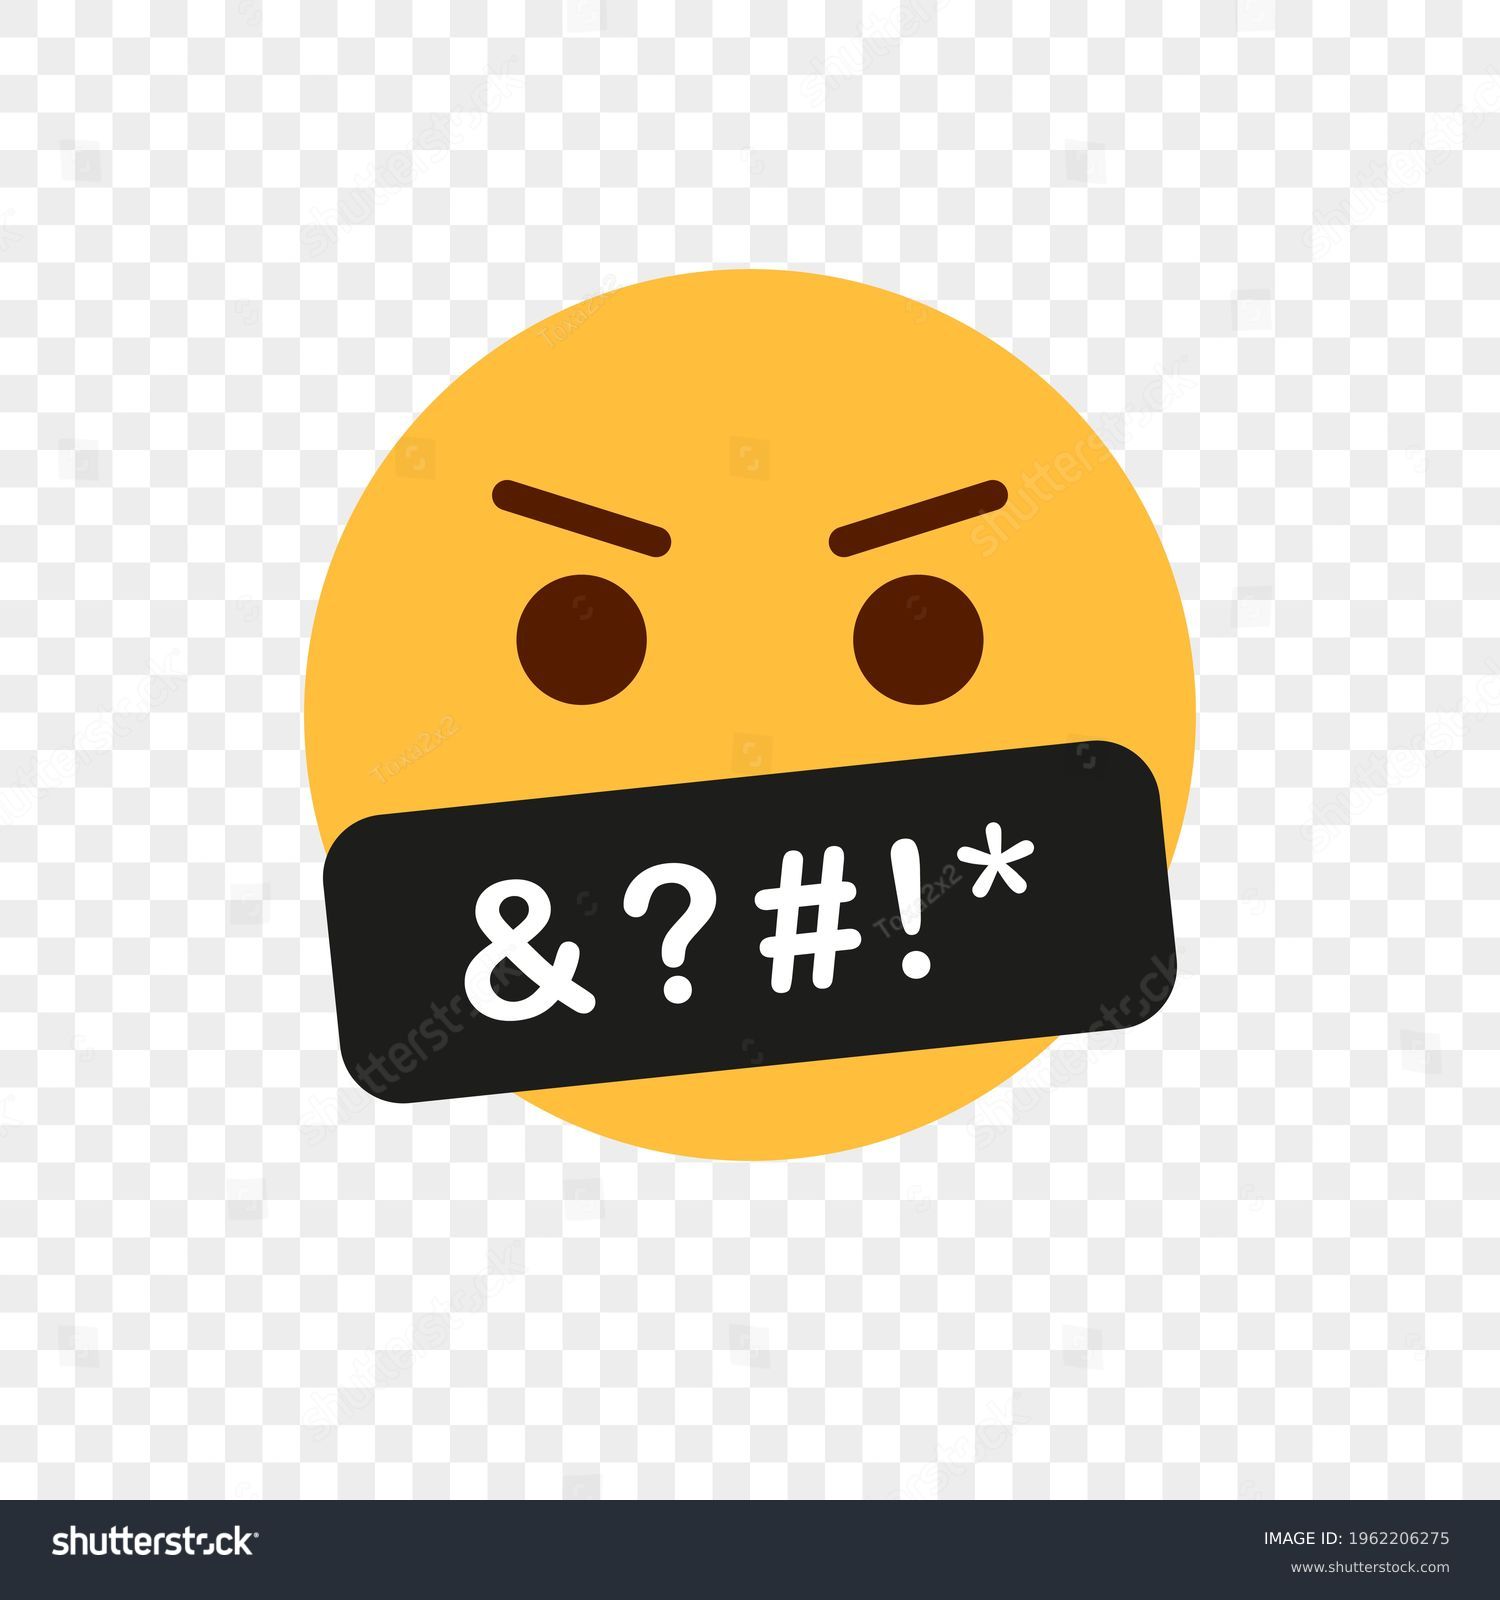 Yellow Angry Face Emoji. Obscene Language. Swearing or Vulgar Word on black bar. Bad Word and Behaviour. Swearing Emoticon icon. Emoji icon with Censored black bar. Vector illustration. #1962206275